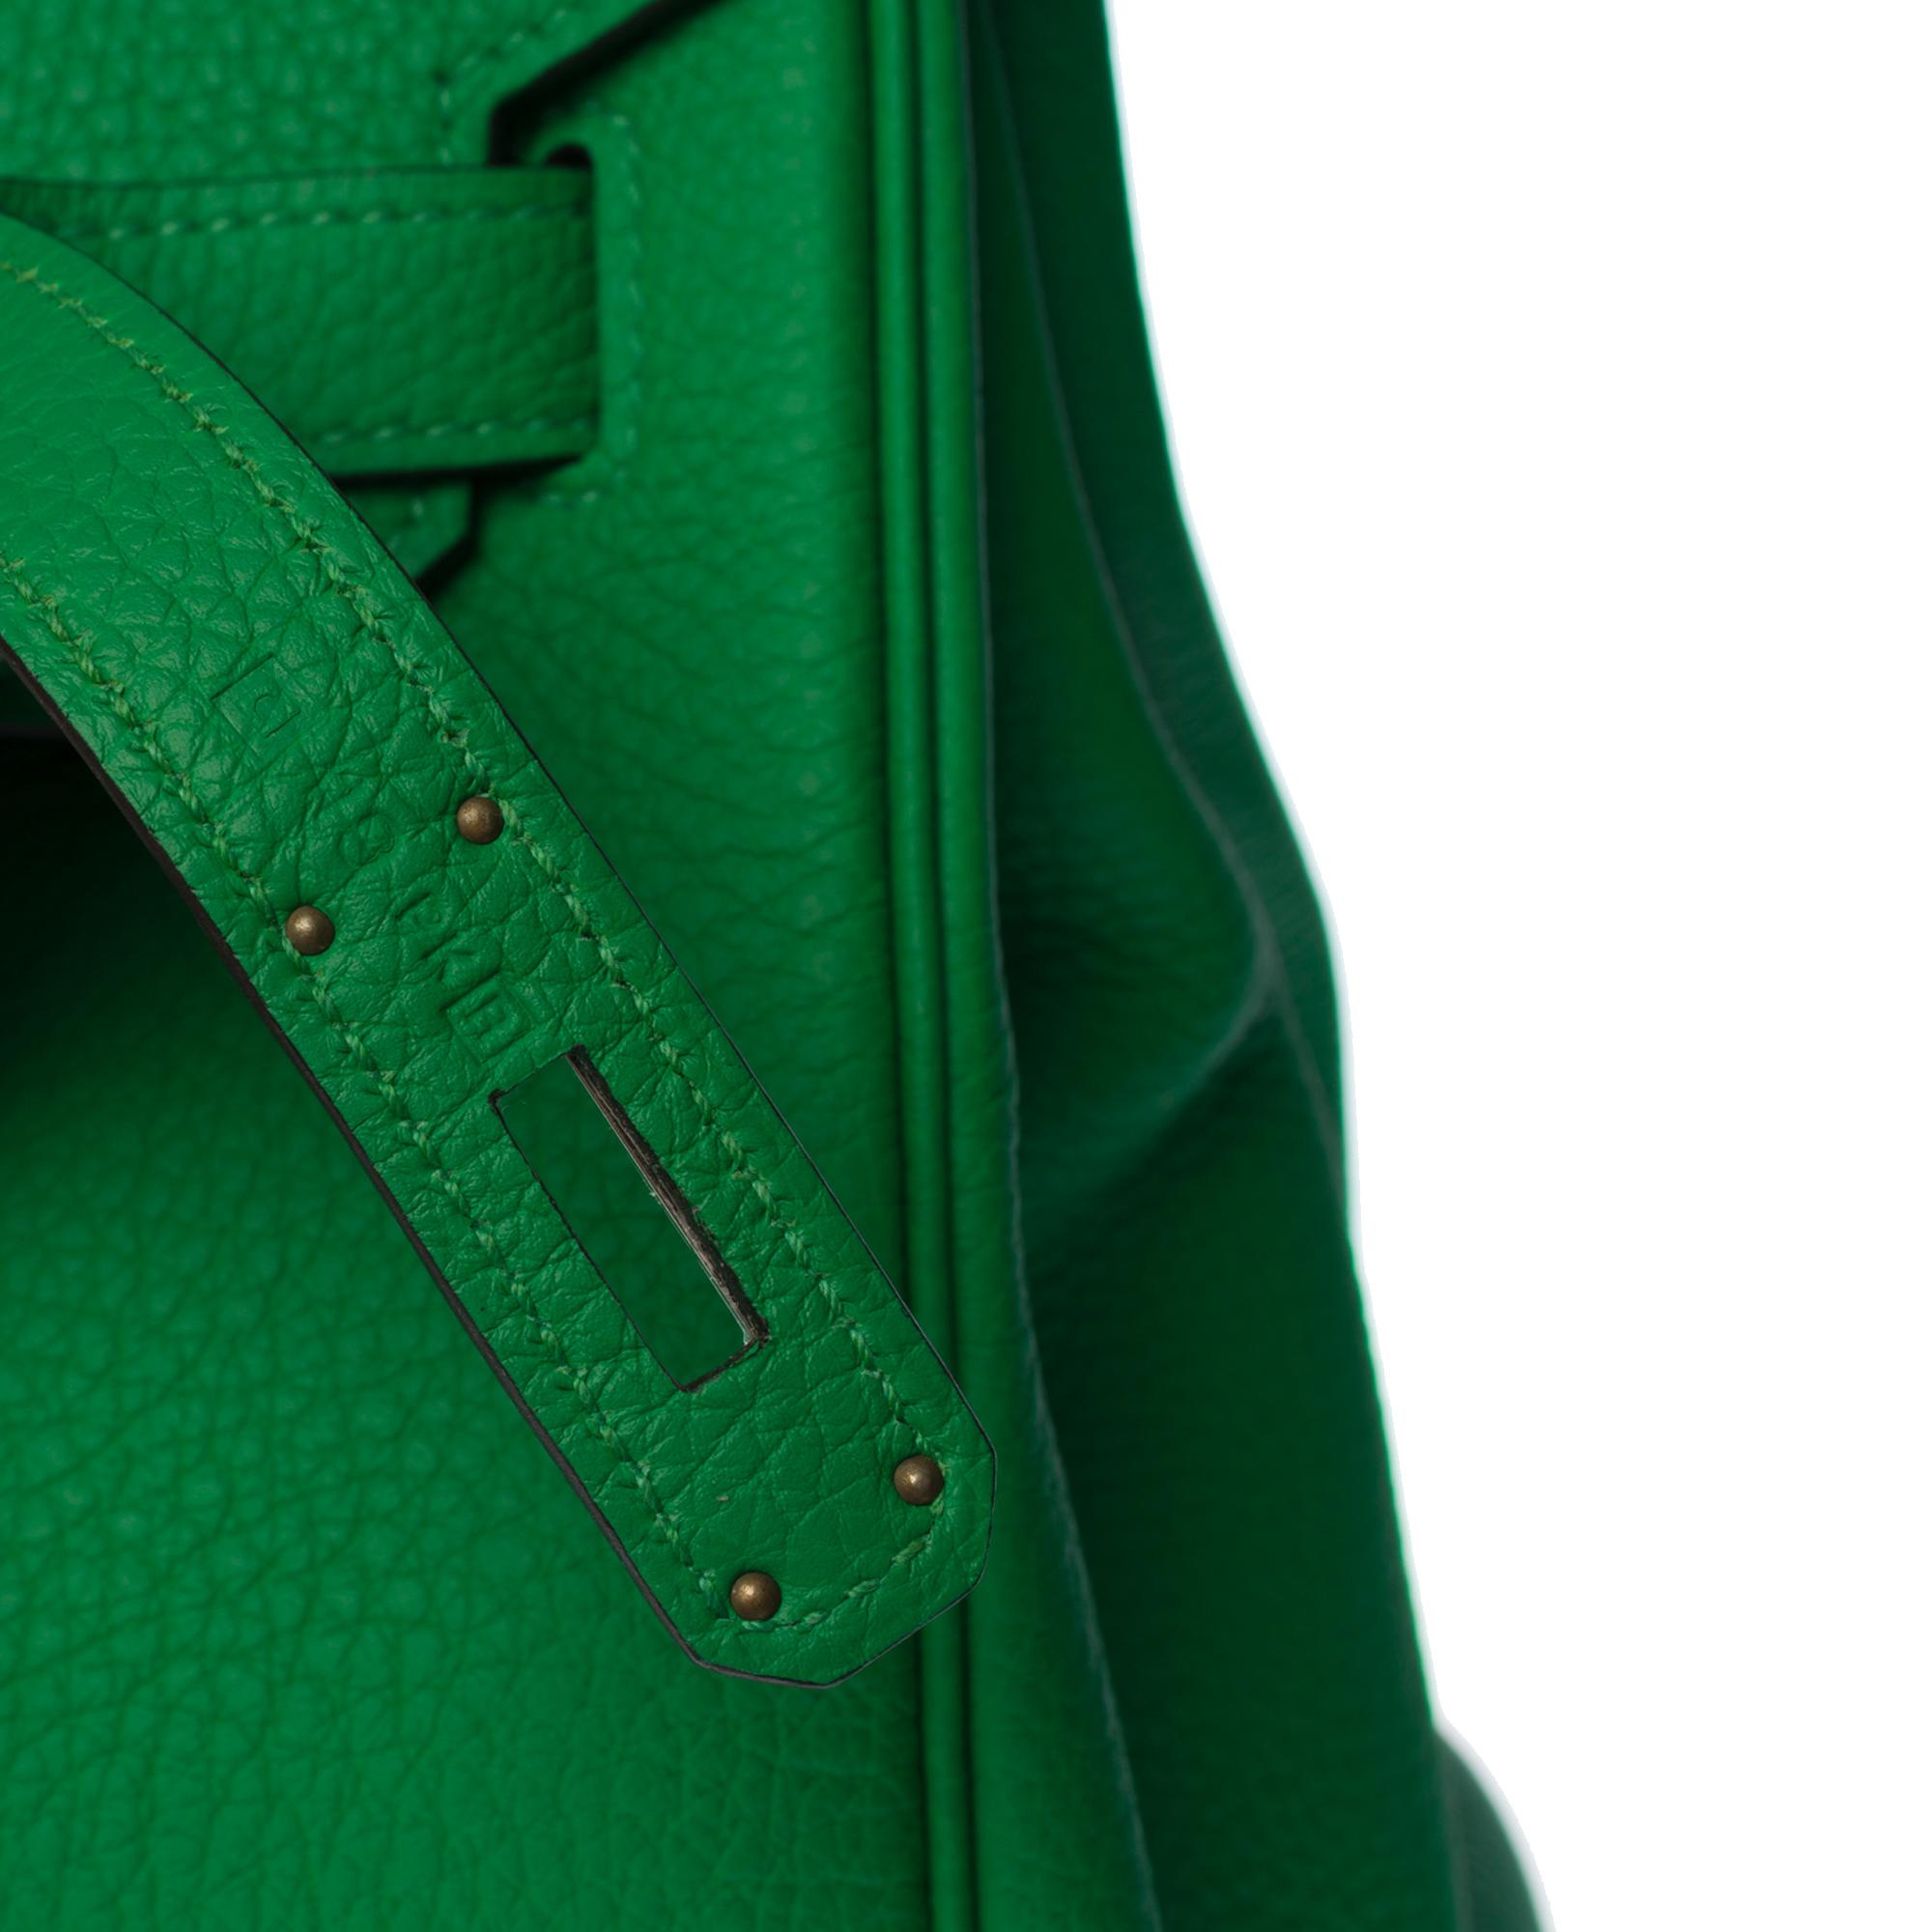 New Condition Hermès Birkin 35 handbag in Vert Bamboo Togo leather, SHW 1